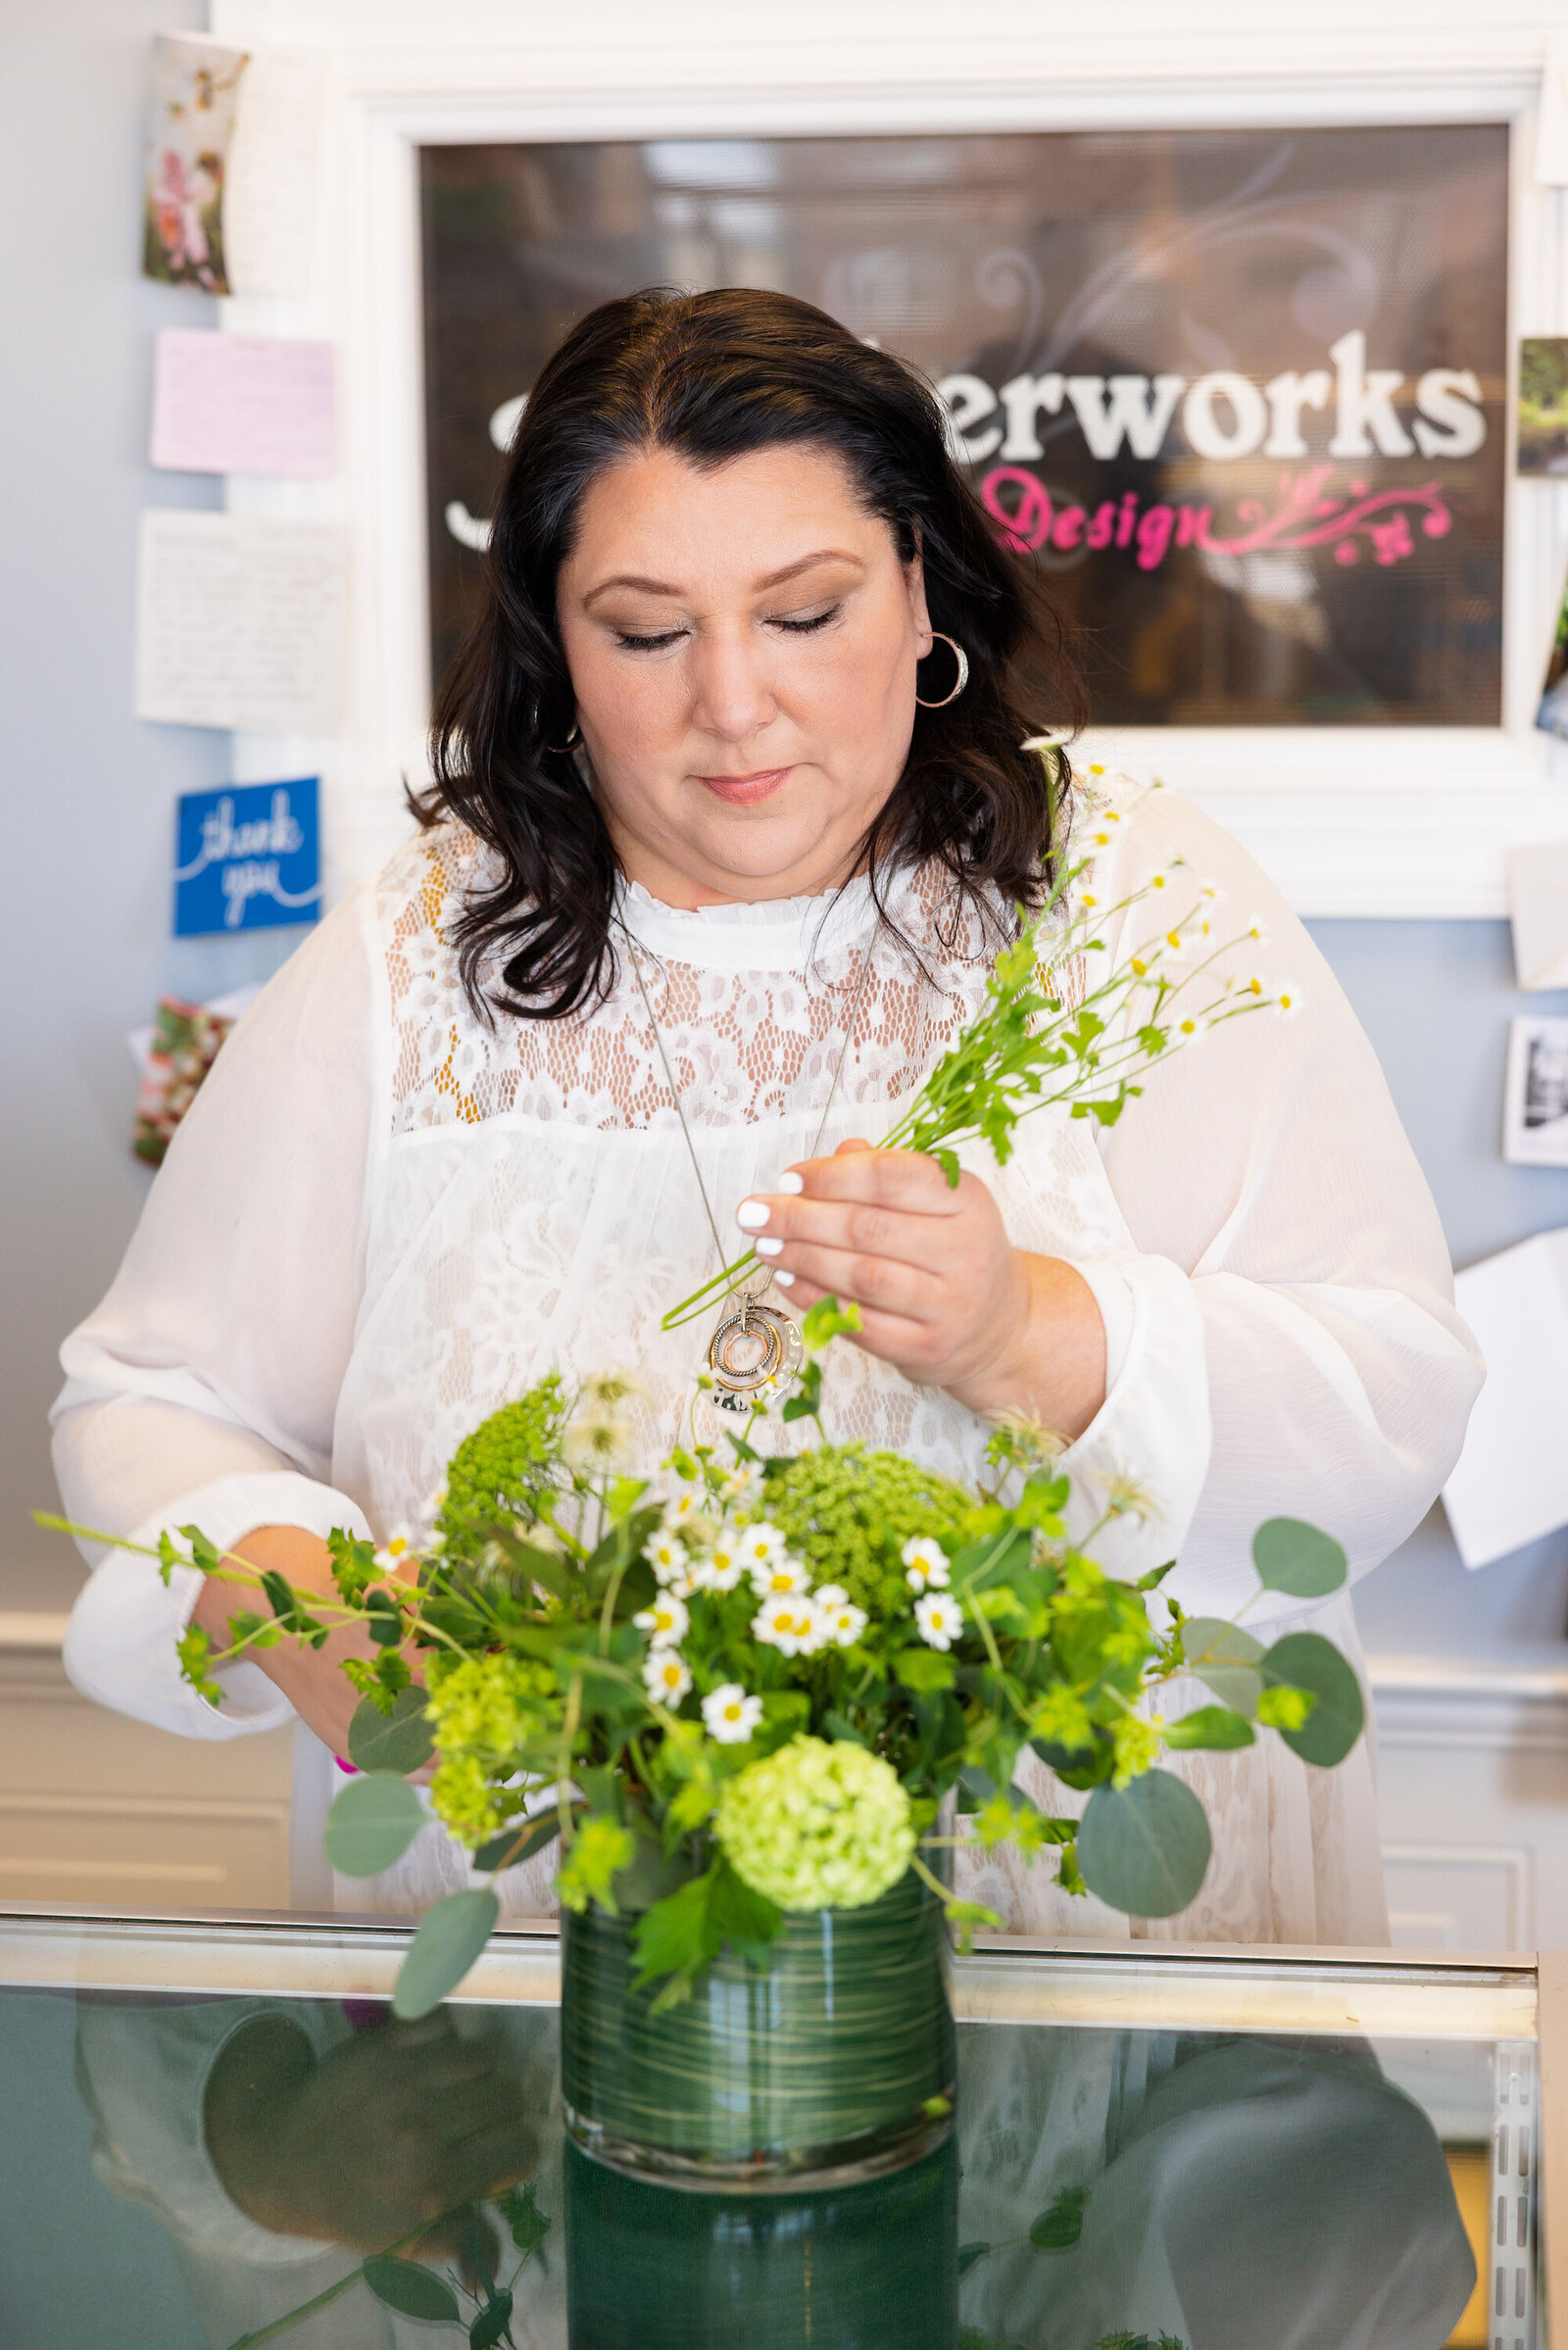 connecticut-wedding-florist-amberworks-floral-design-9